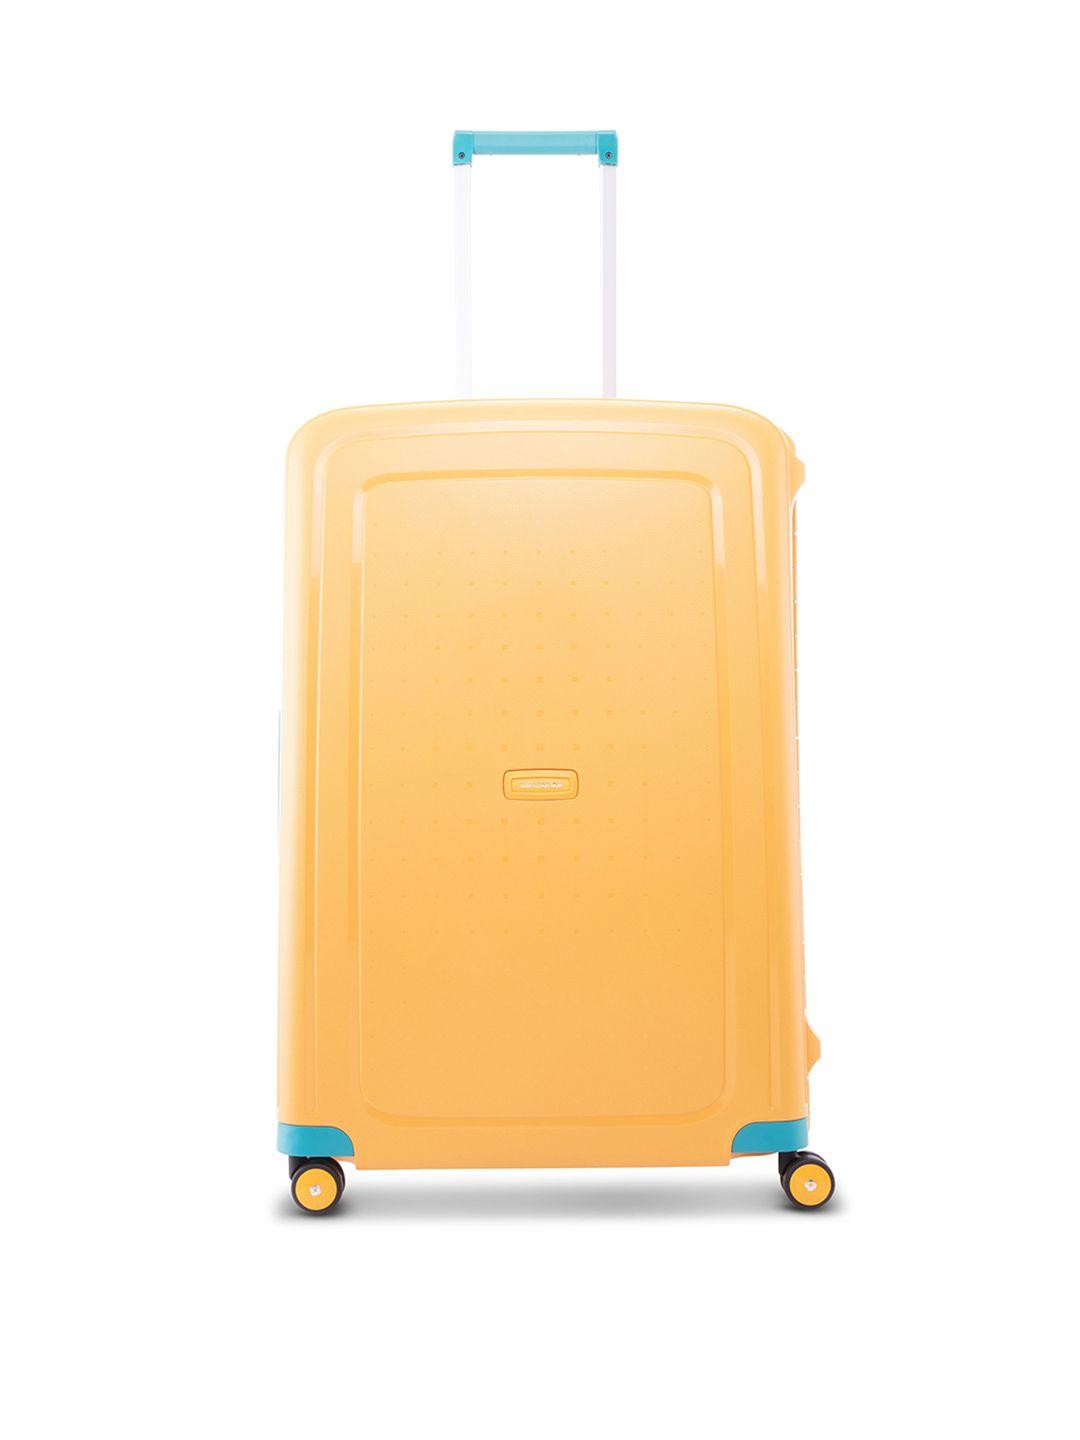 samsonite hard-sided large trolley suitcase